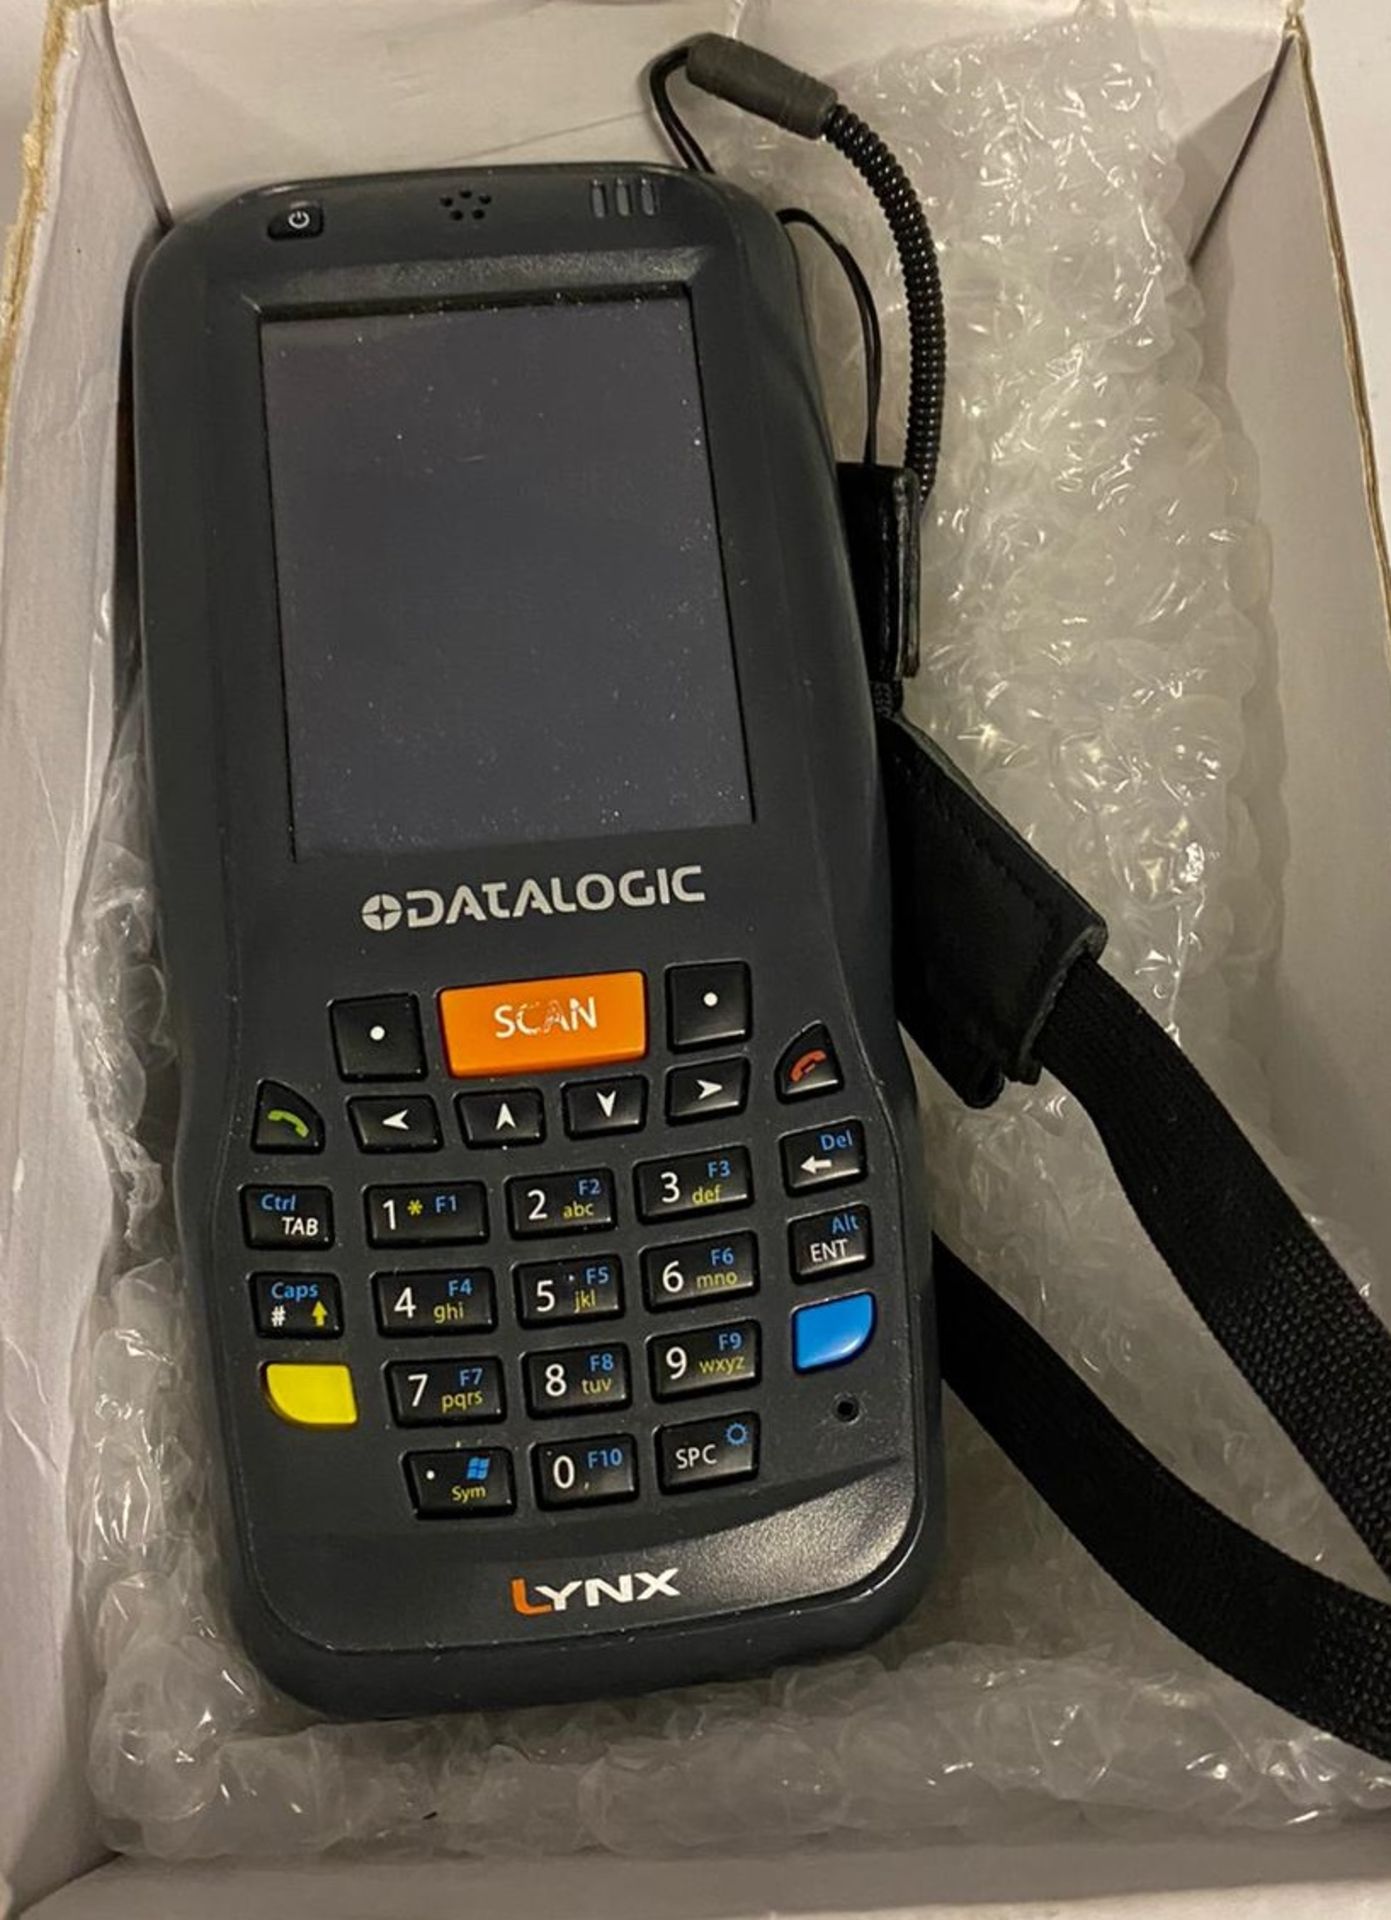 1 x Datalogic Lynx Mobile Handheld Computer - Used Condition - Location: Altrincham WA14 - - Image 3 of 5